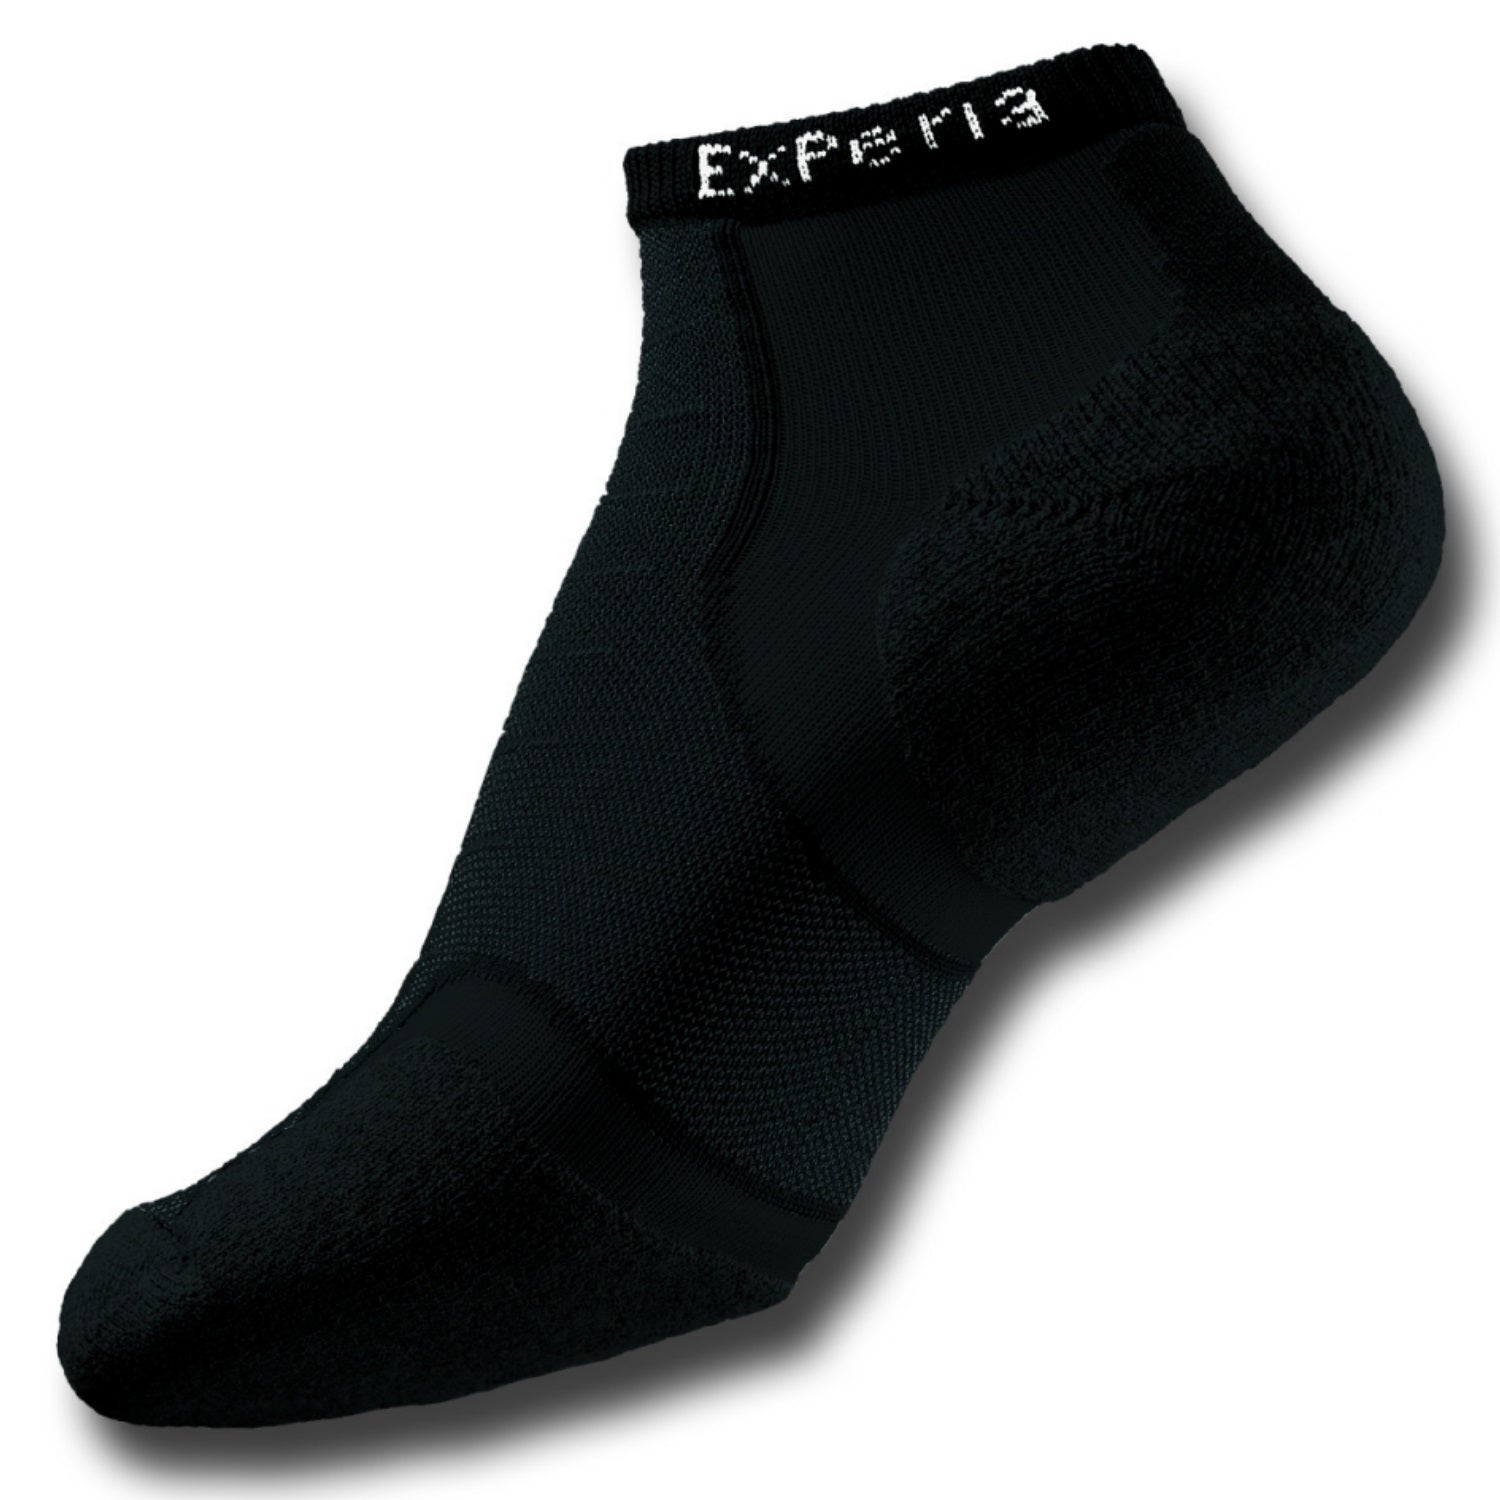 Thorlo XCCU Running Socks - Unisex